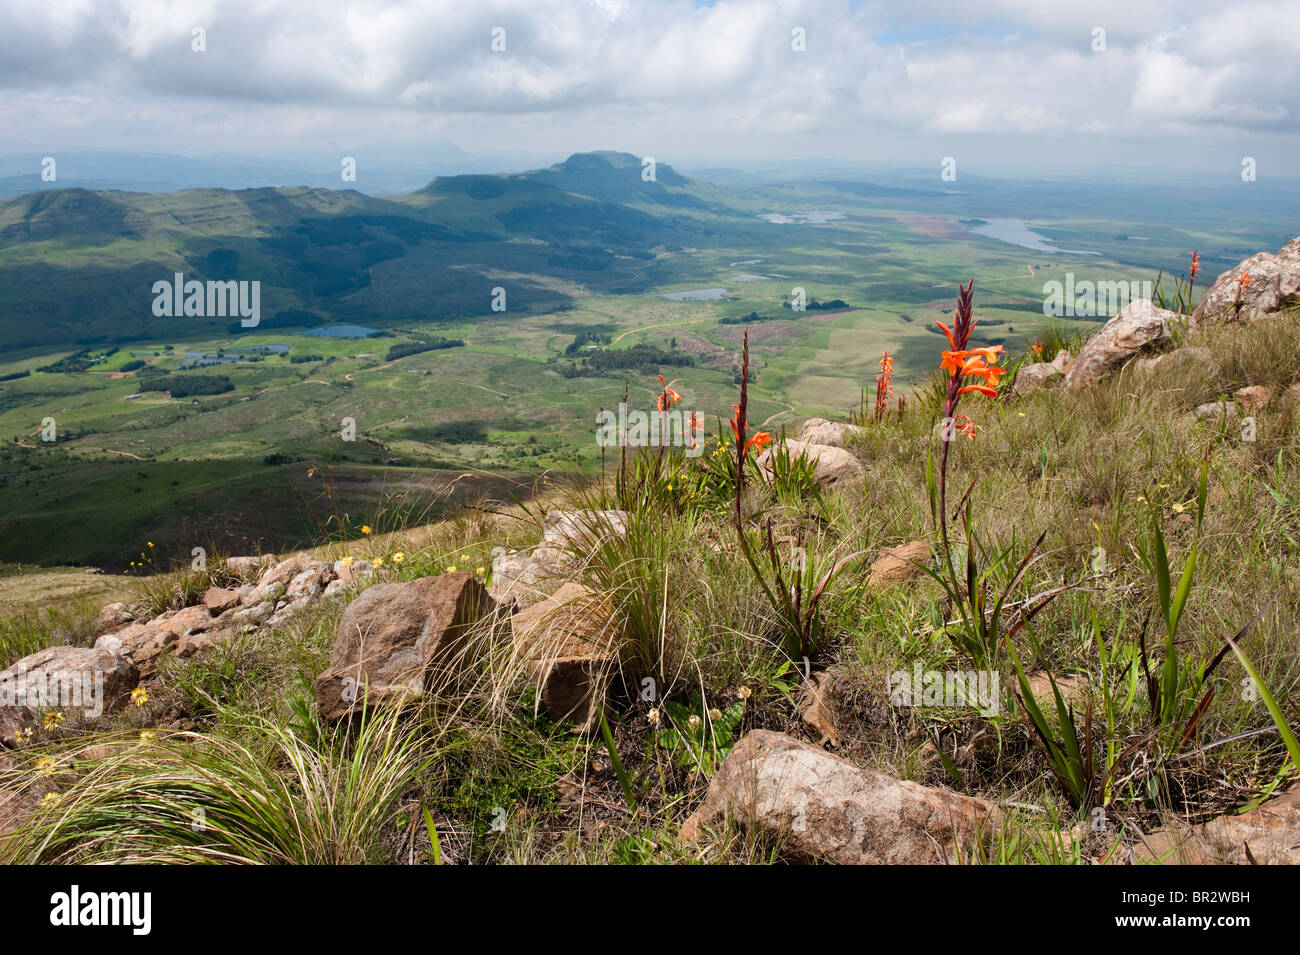 Pilans' watsonia, Watsonia pillansii, Mount Lebanon, Highmoor nature reserve, uKhahlamba Drakensberg Park, South Africa Stock Photo